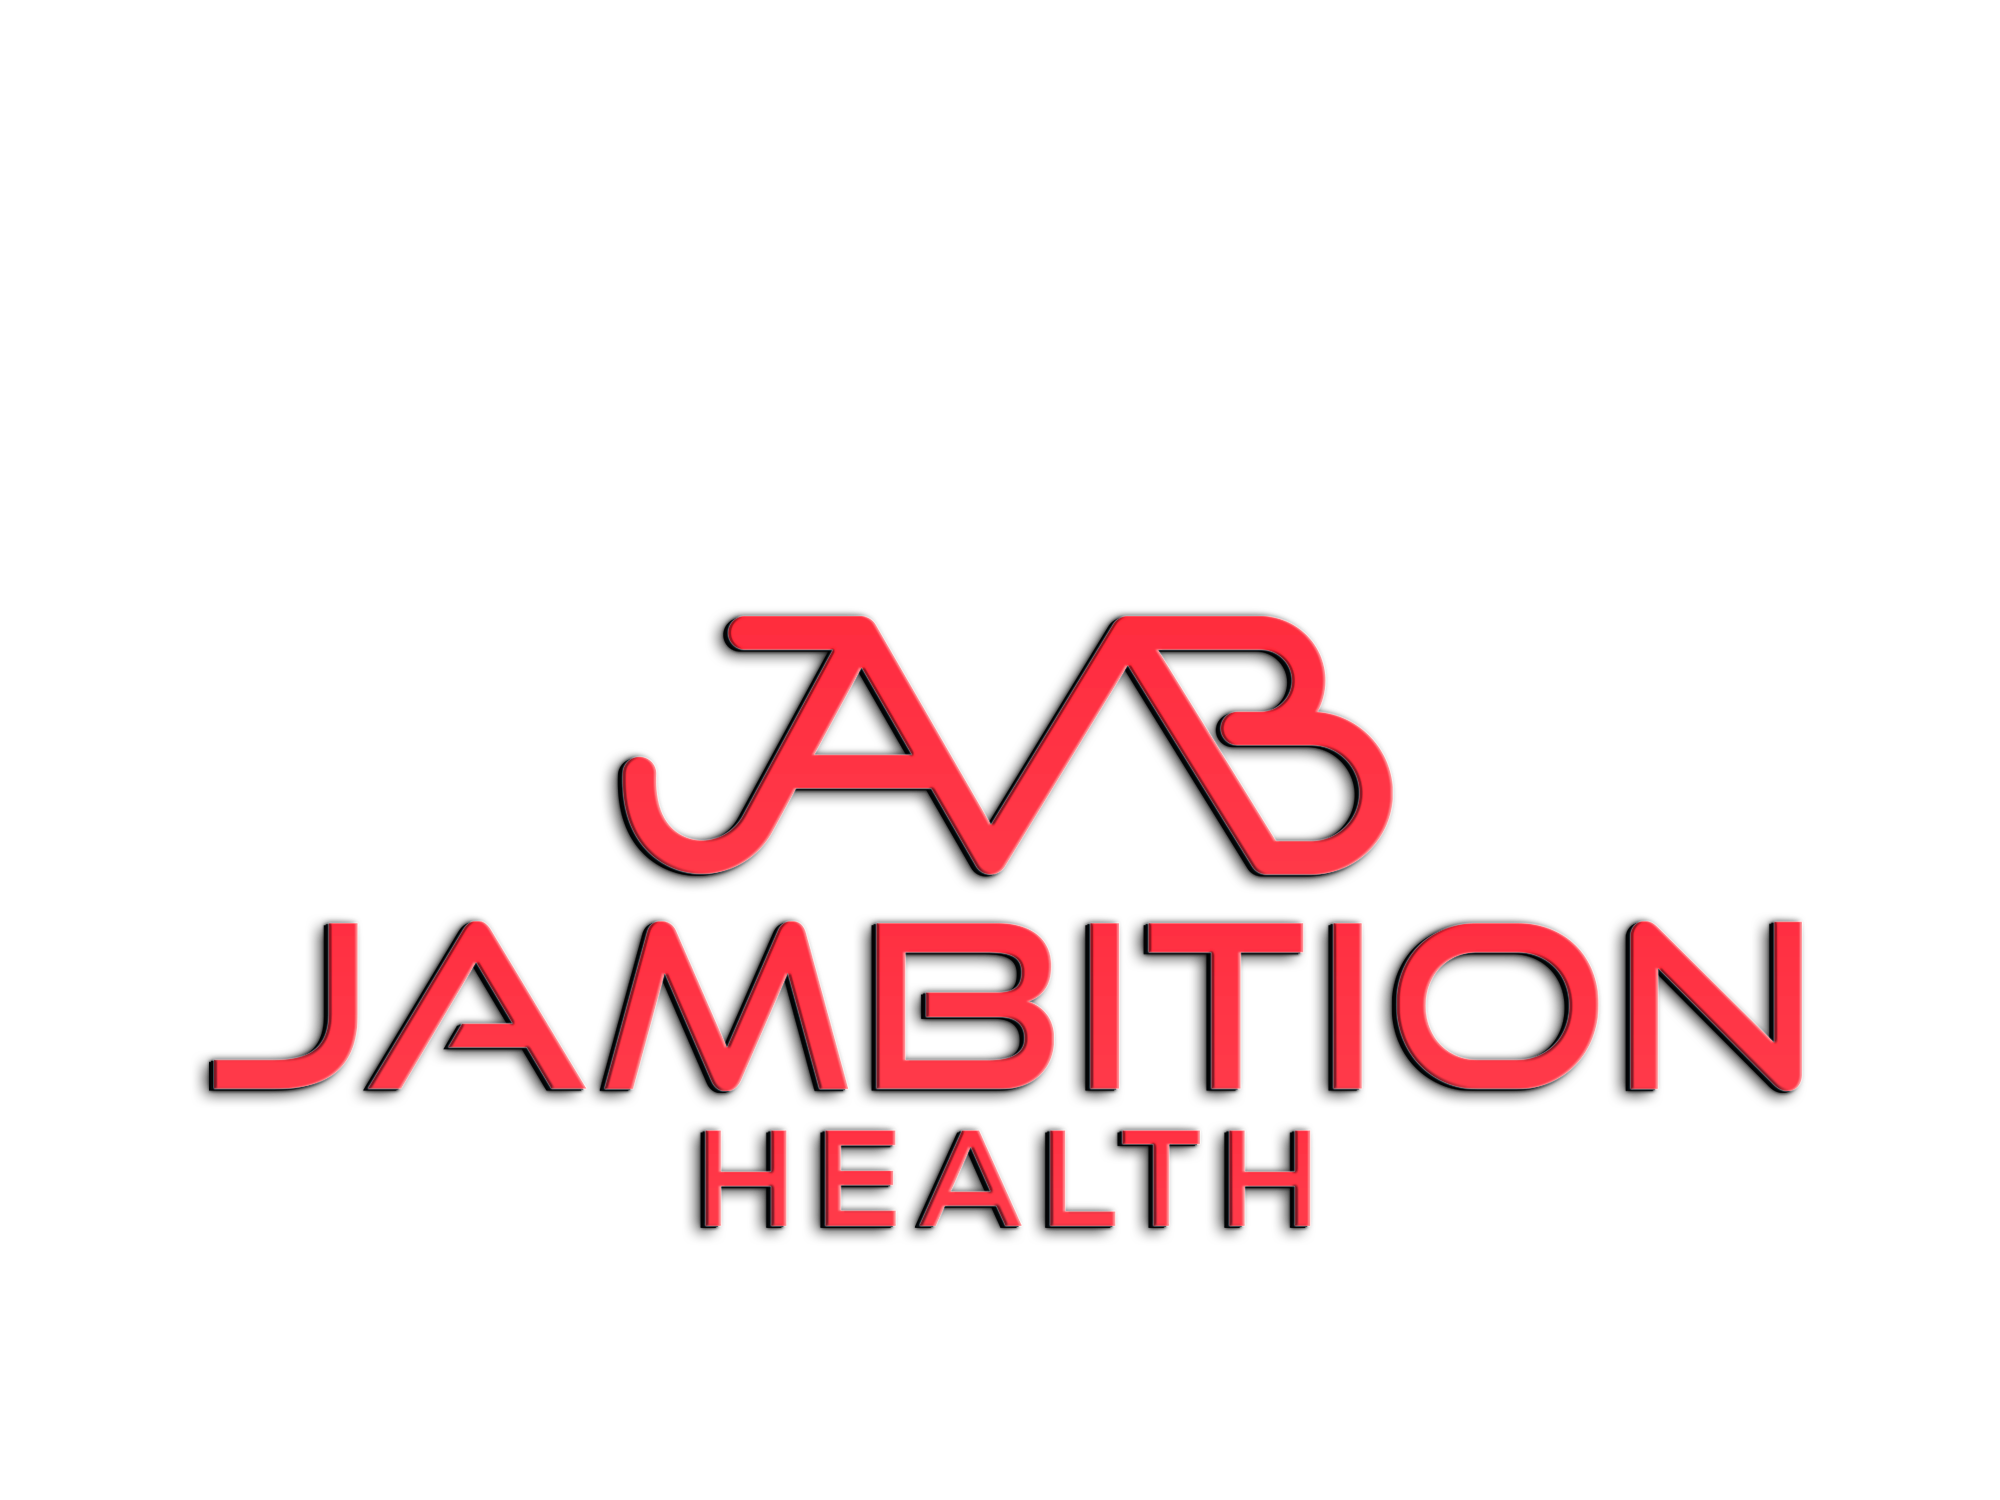 Jambition Health